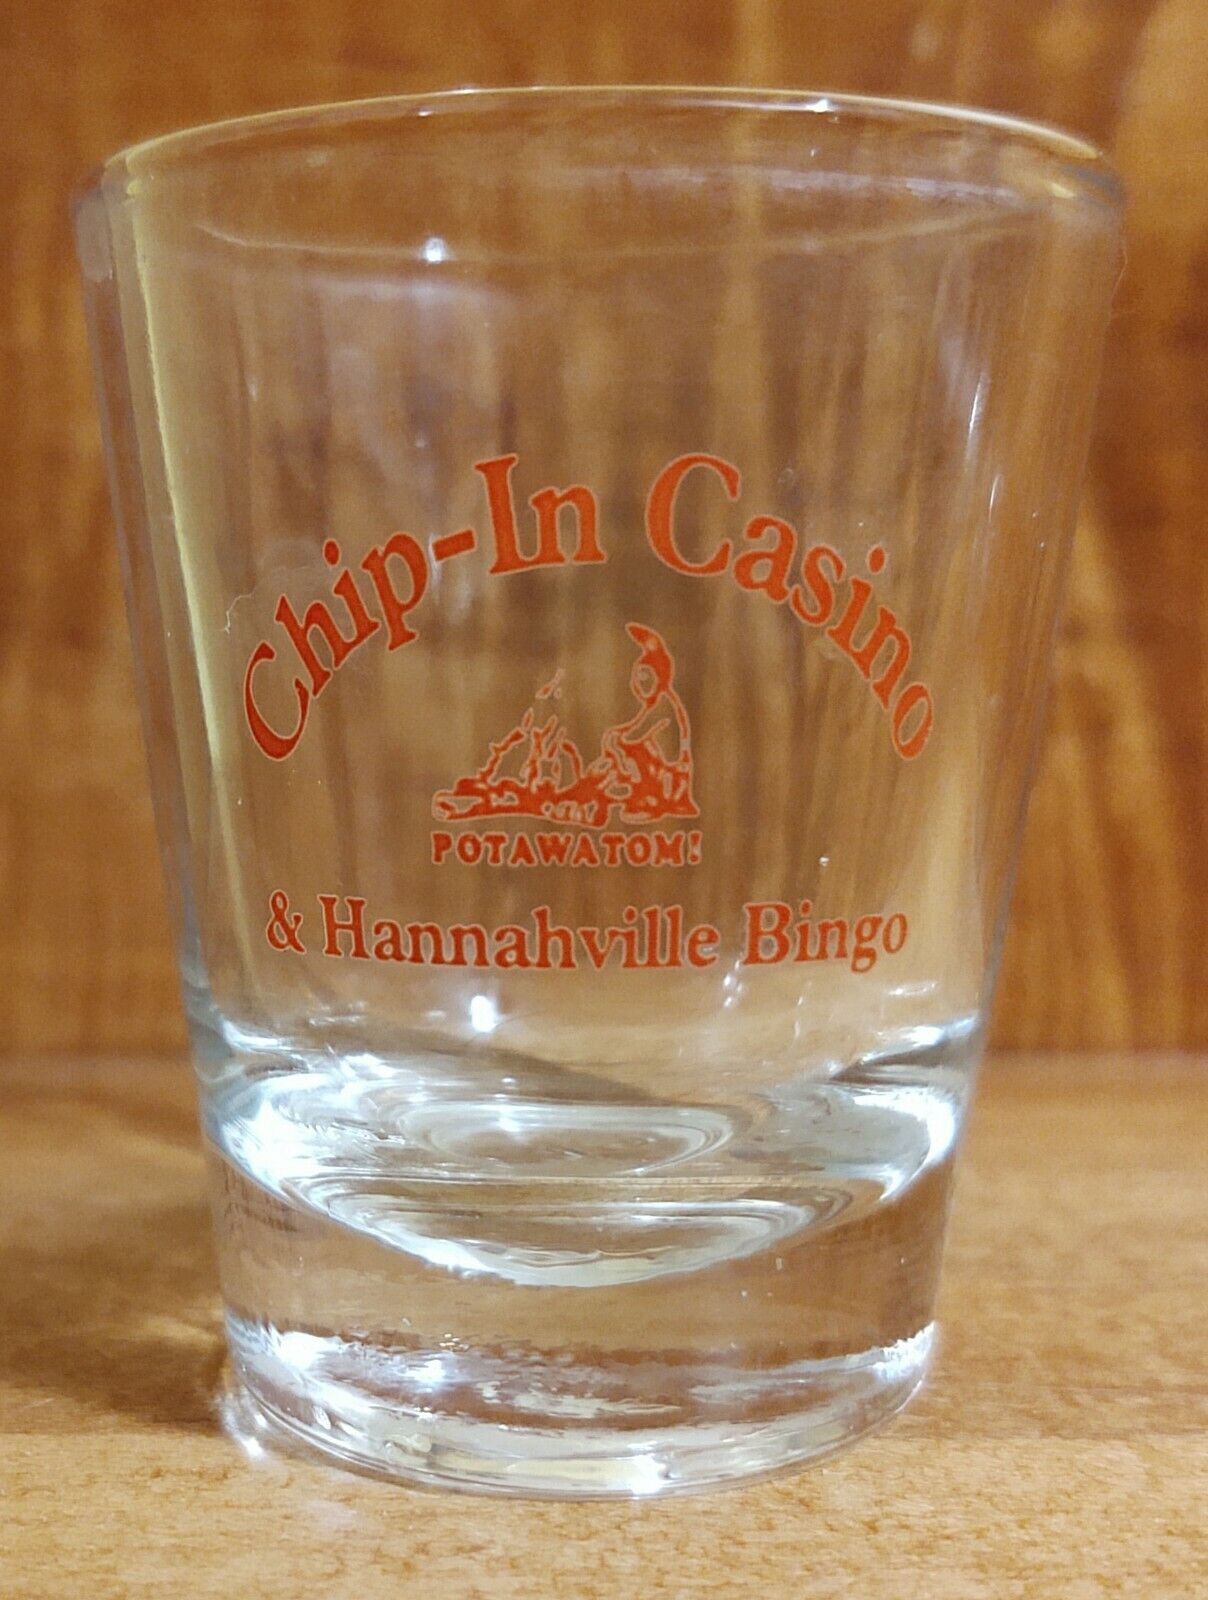 Chip-In Casino & Hannahville Bingo Potawatomi shot glass 